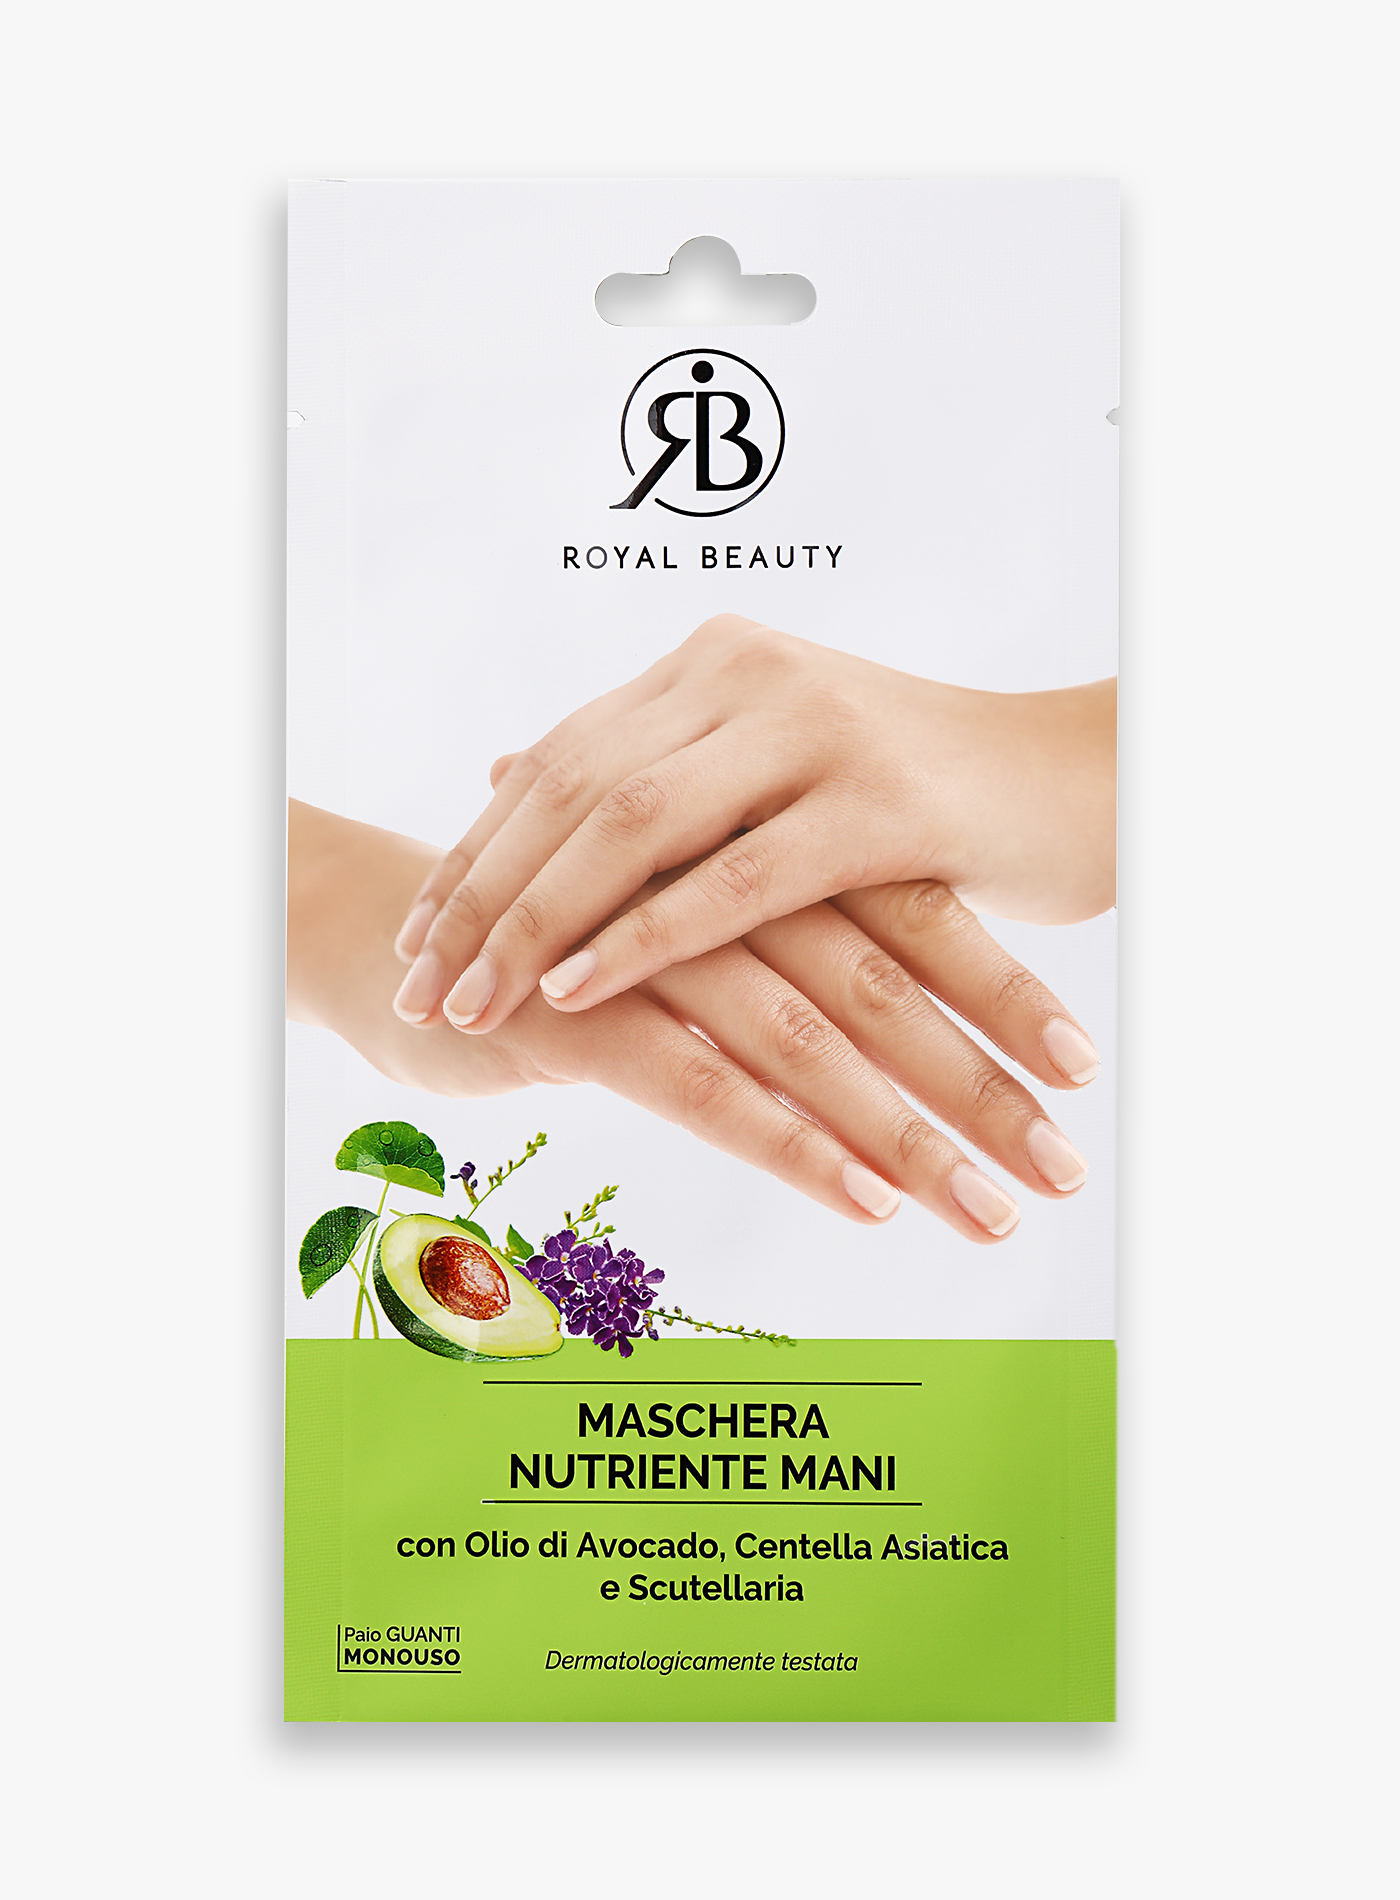 Maschera nutriente mani all' olio di avocado - Royal Beauty